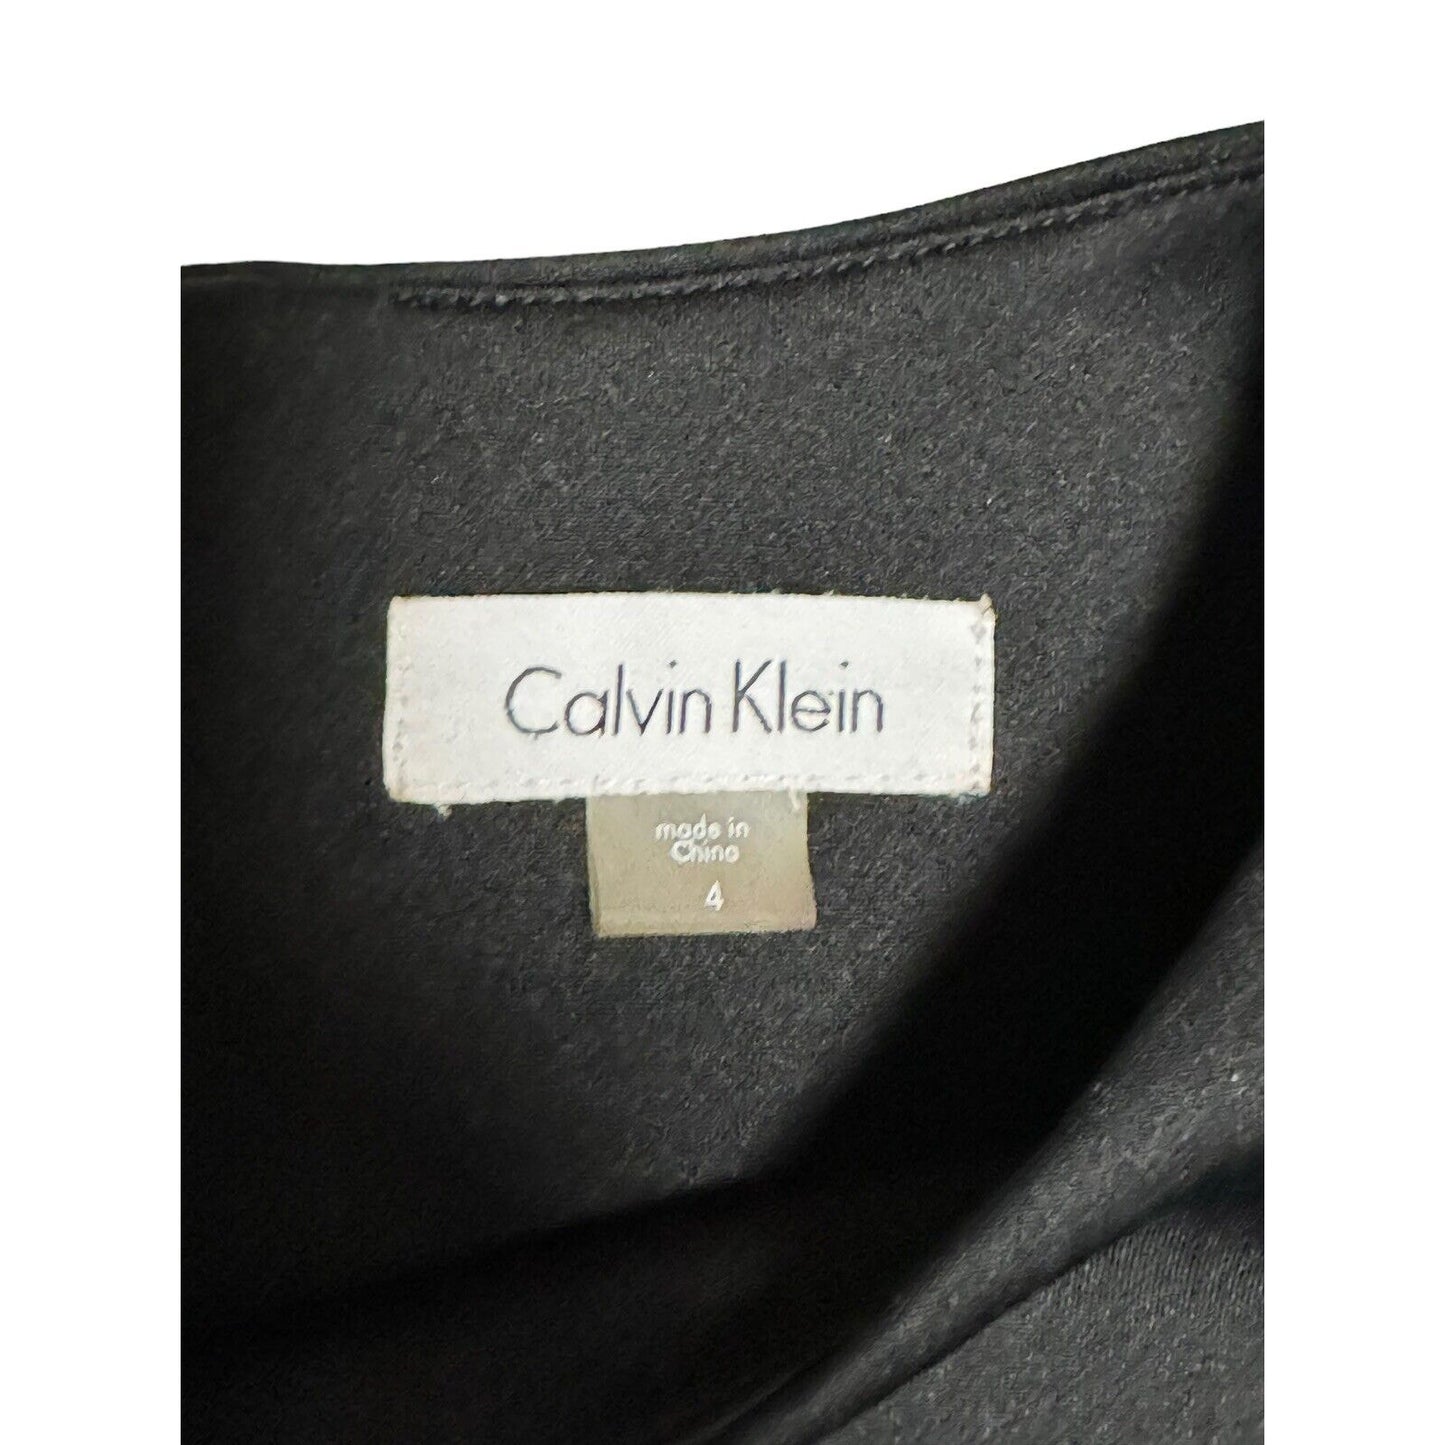 Calvin Klein Color Block Sheath Dress Size 4 Black Pink White